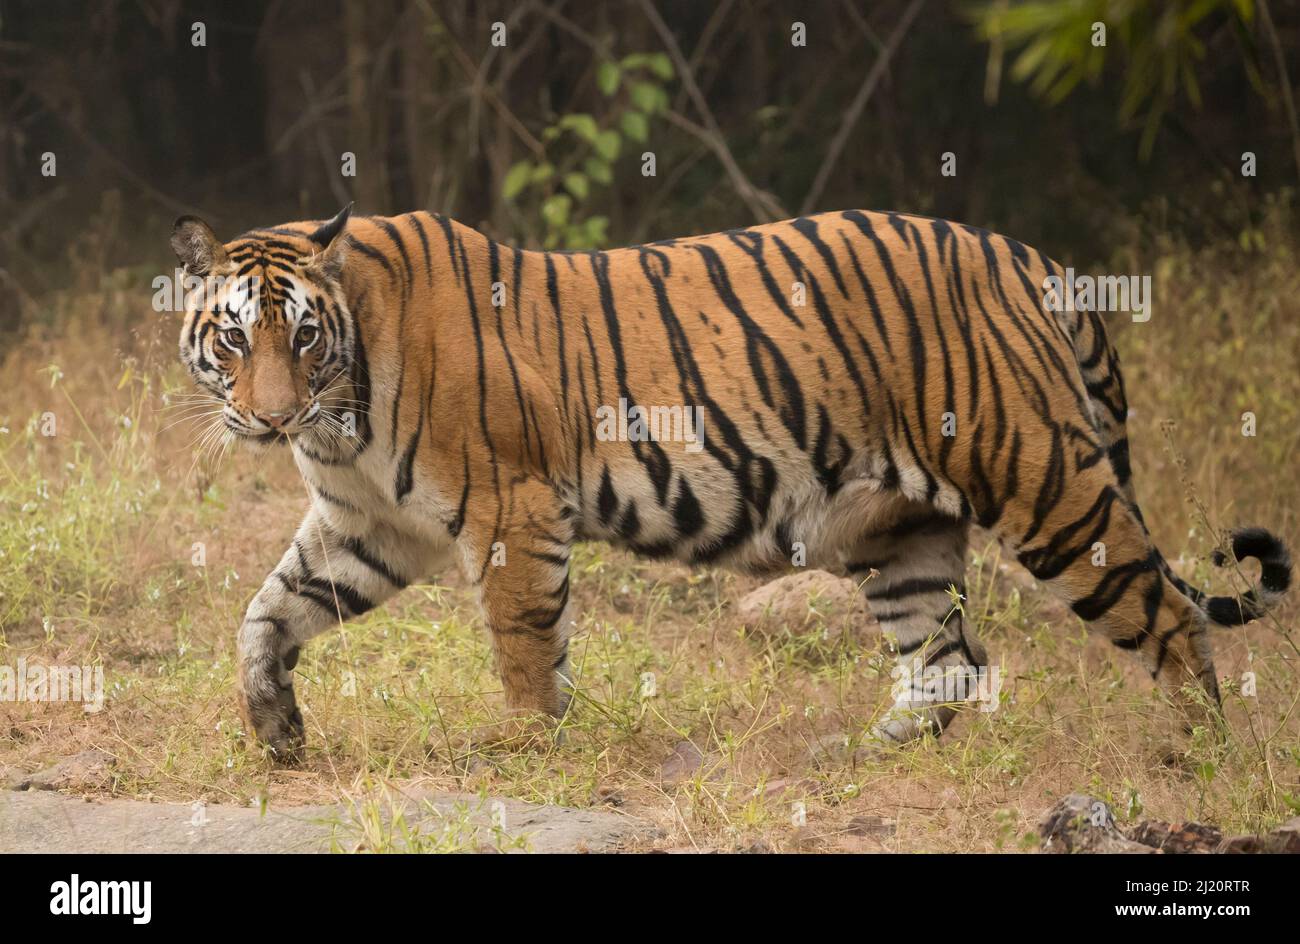 La tigre bengala (Panthera tigris tigris) camminando profilo, cercando preda. Bandhavgarh National Park, India, dicembre. Foto Stock